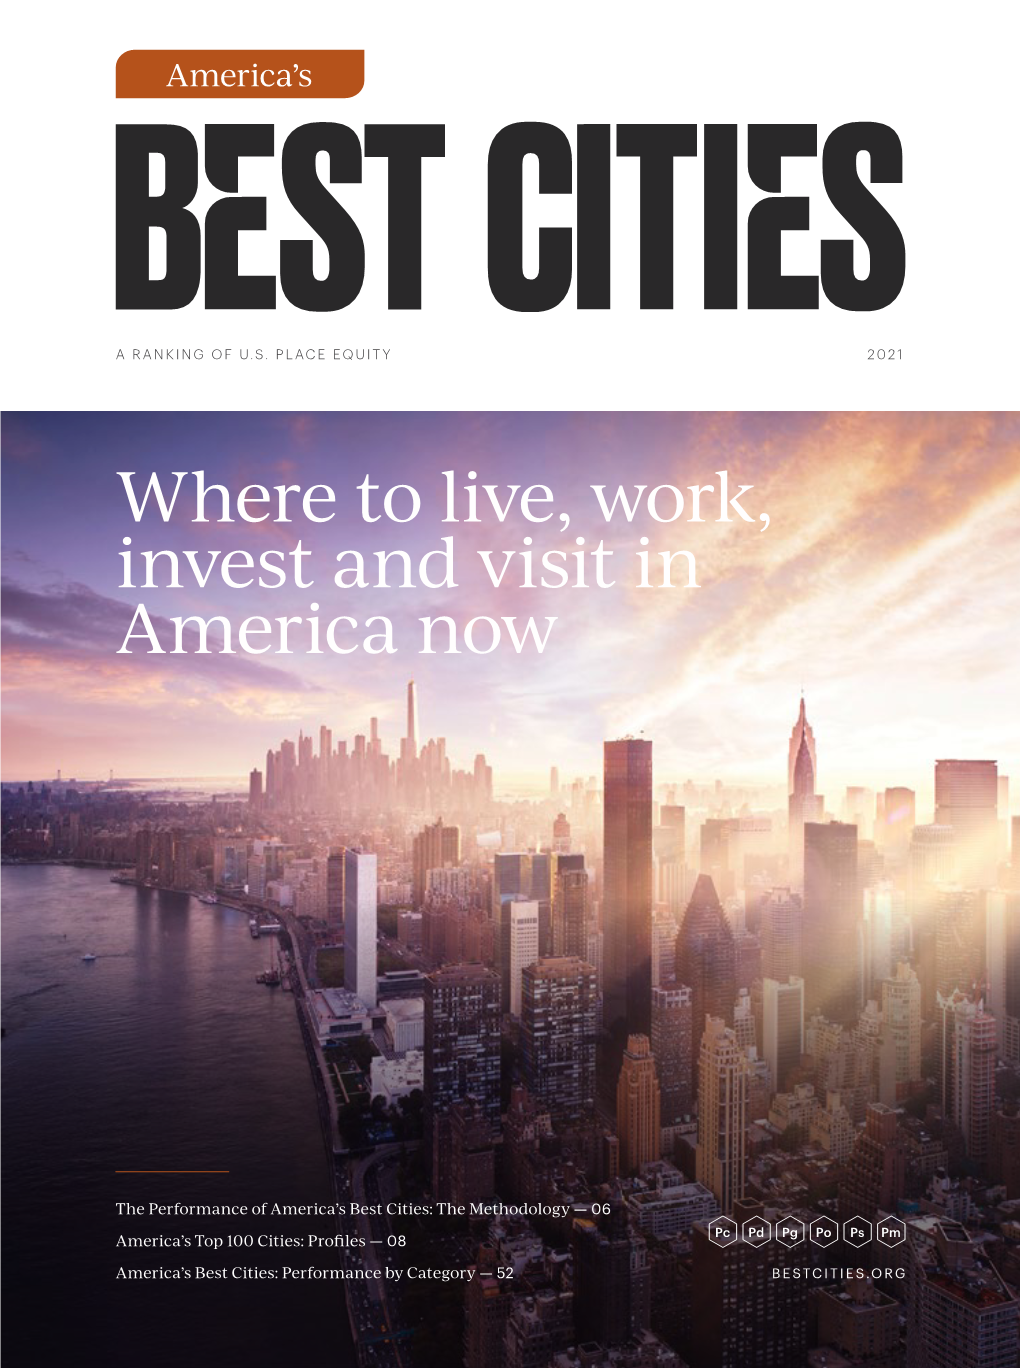 America's Best Cities 2021